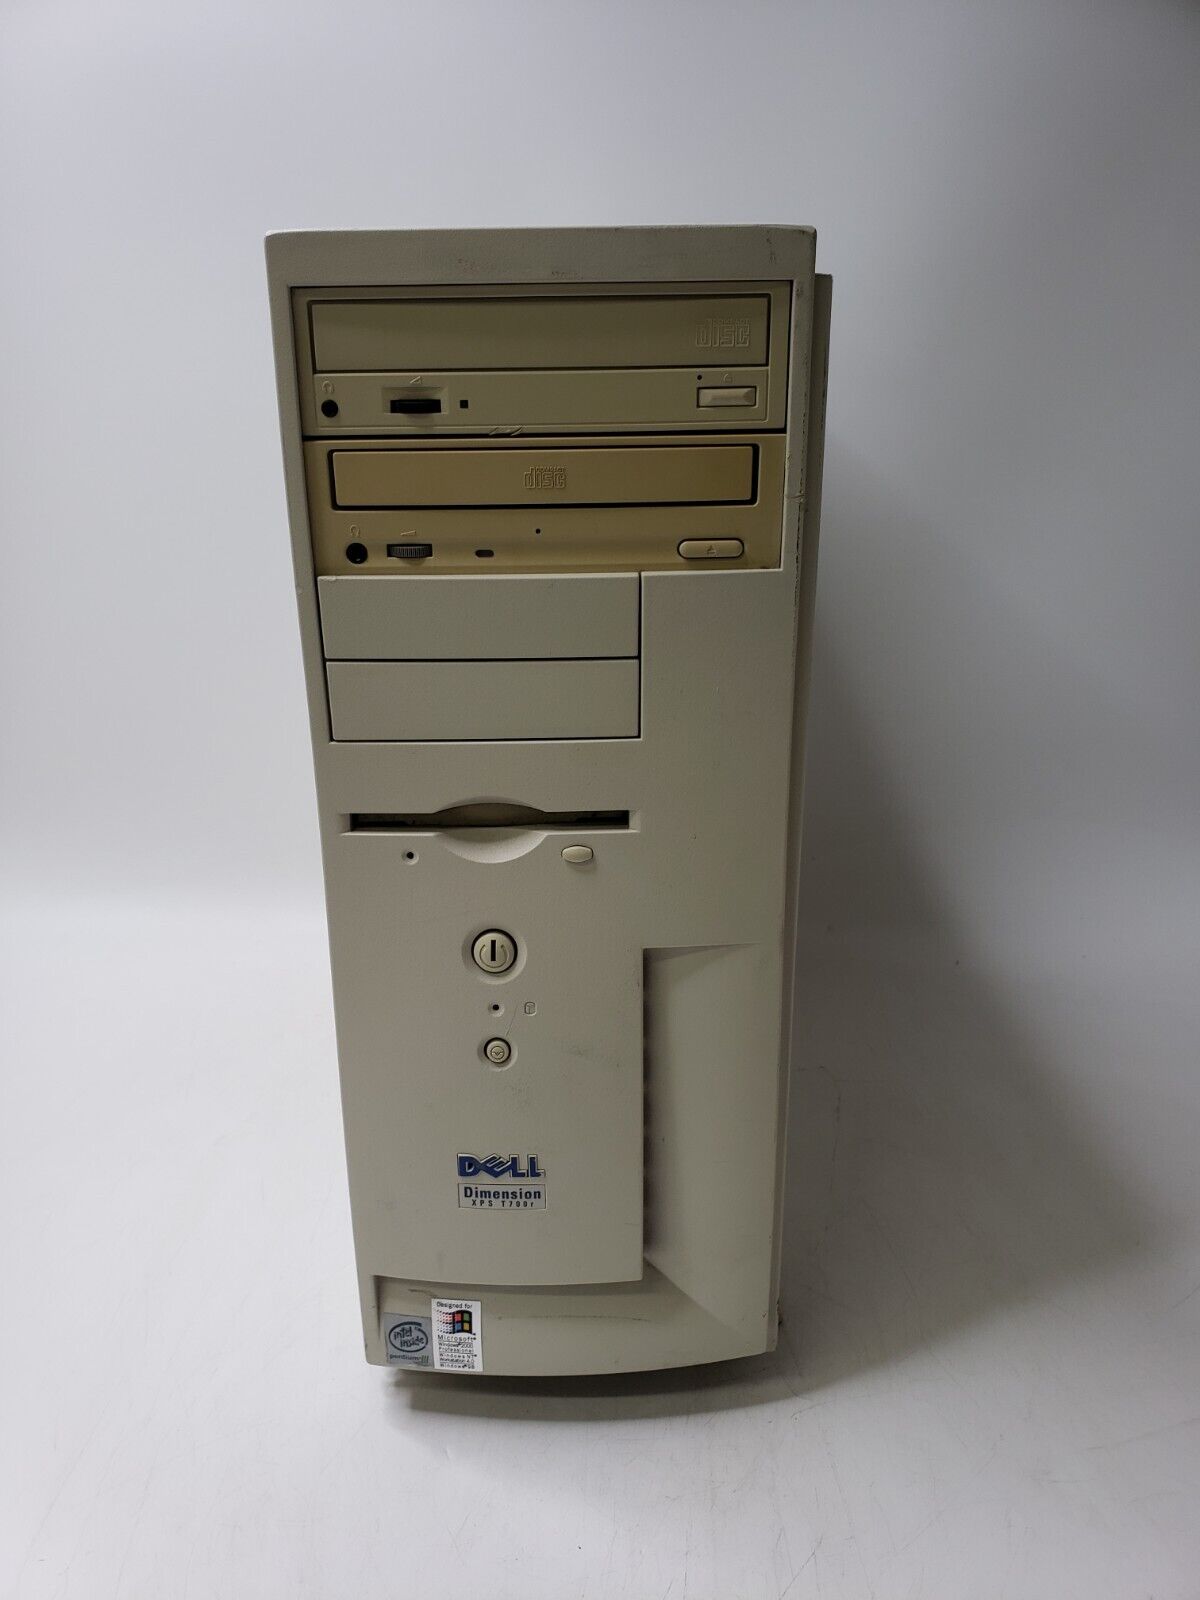 Dell Dimension XPS T700r Pentium III 700MHz 192MB RAM No HDD Vintage Desktop